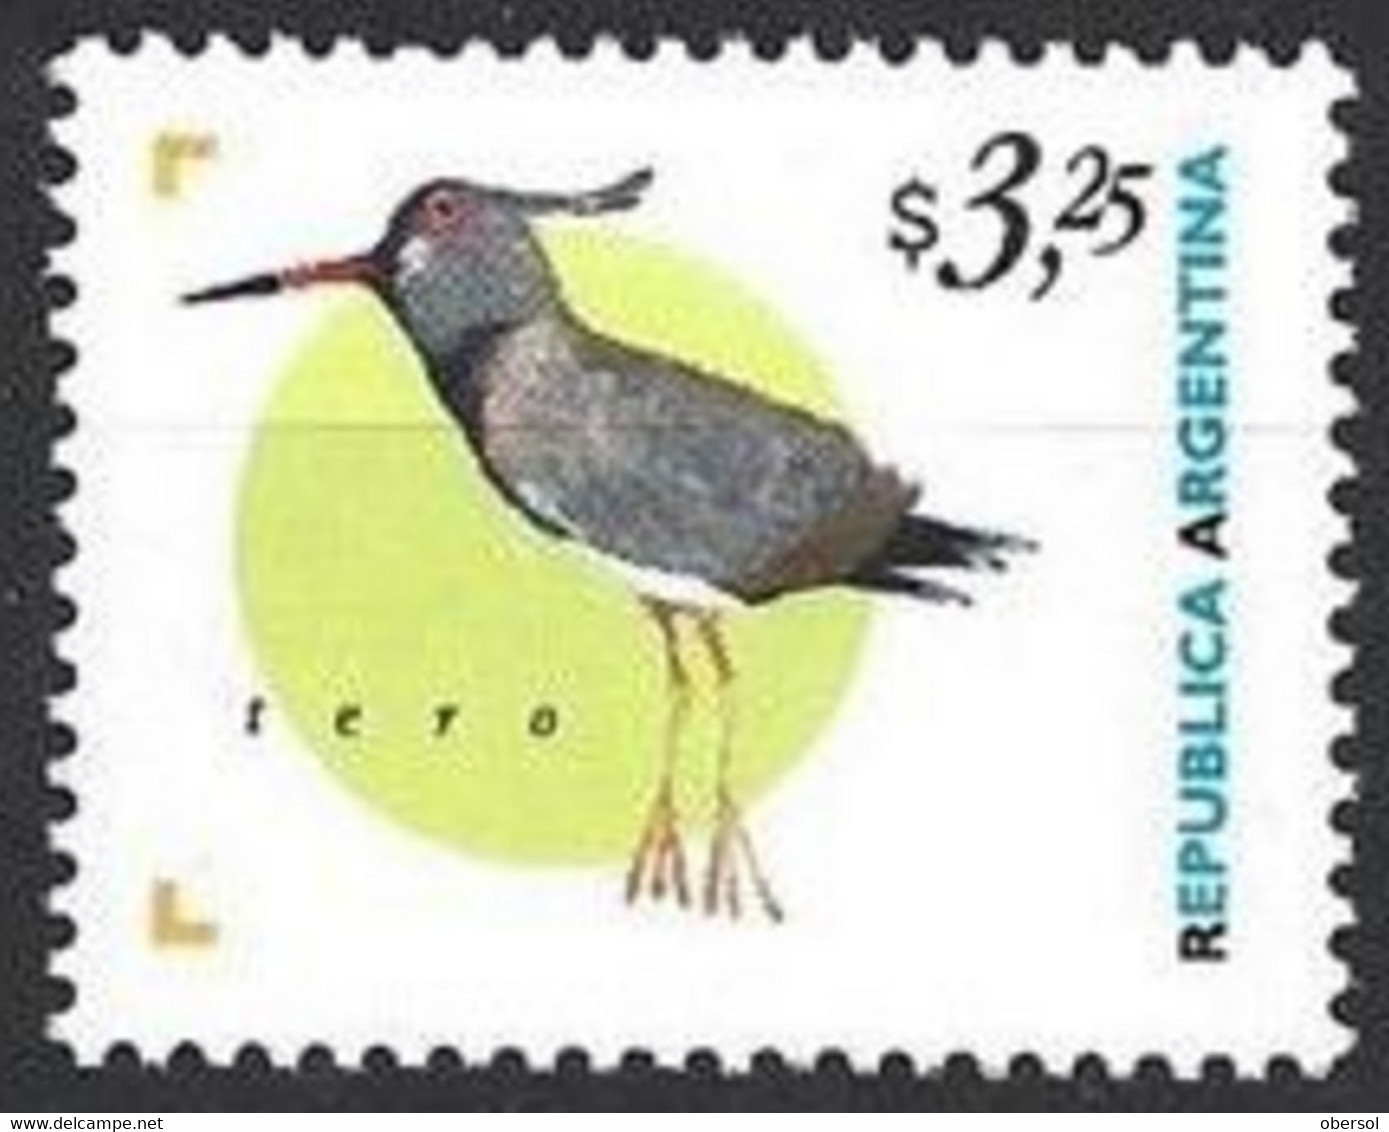 Argentina 1998 Permanent/Definitives Tero Bird Stamp White Gum MNH Stamp - Nuevos